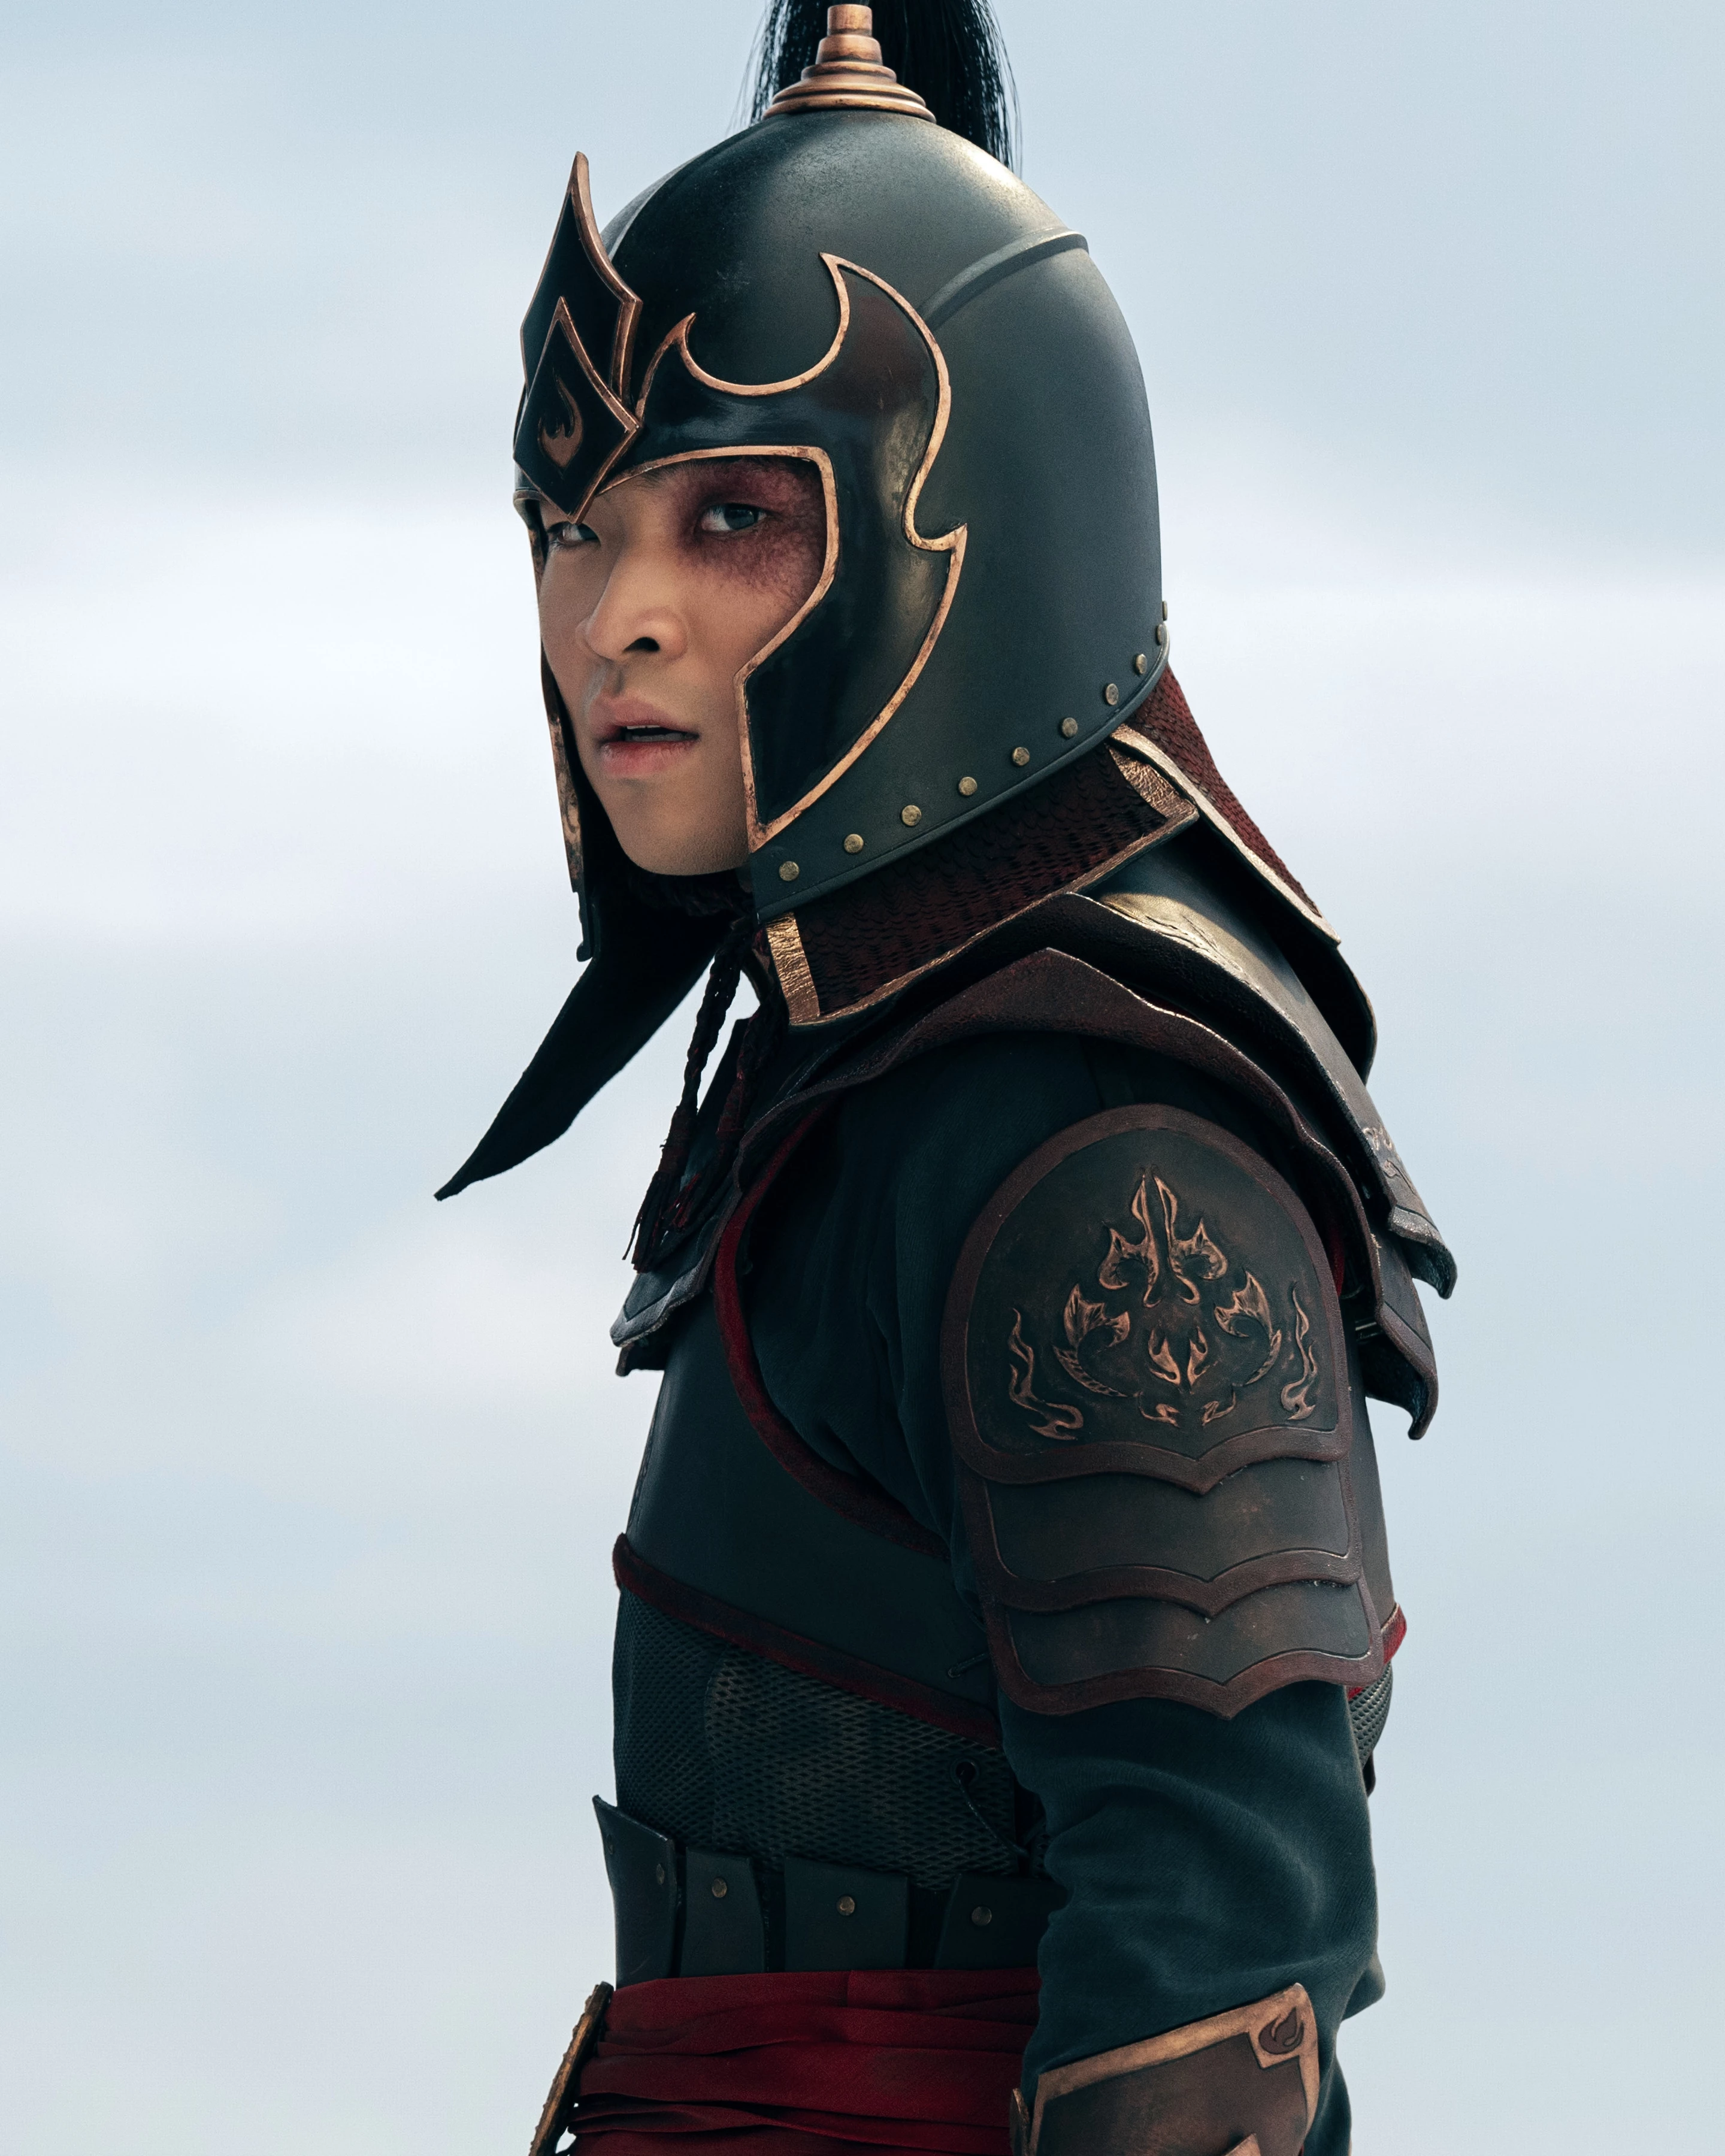 Dallas Liu Stars As Prince Zuko Of The Fire Nation